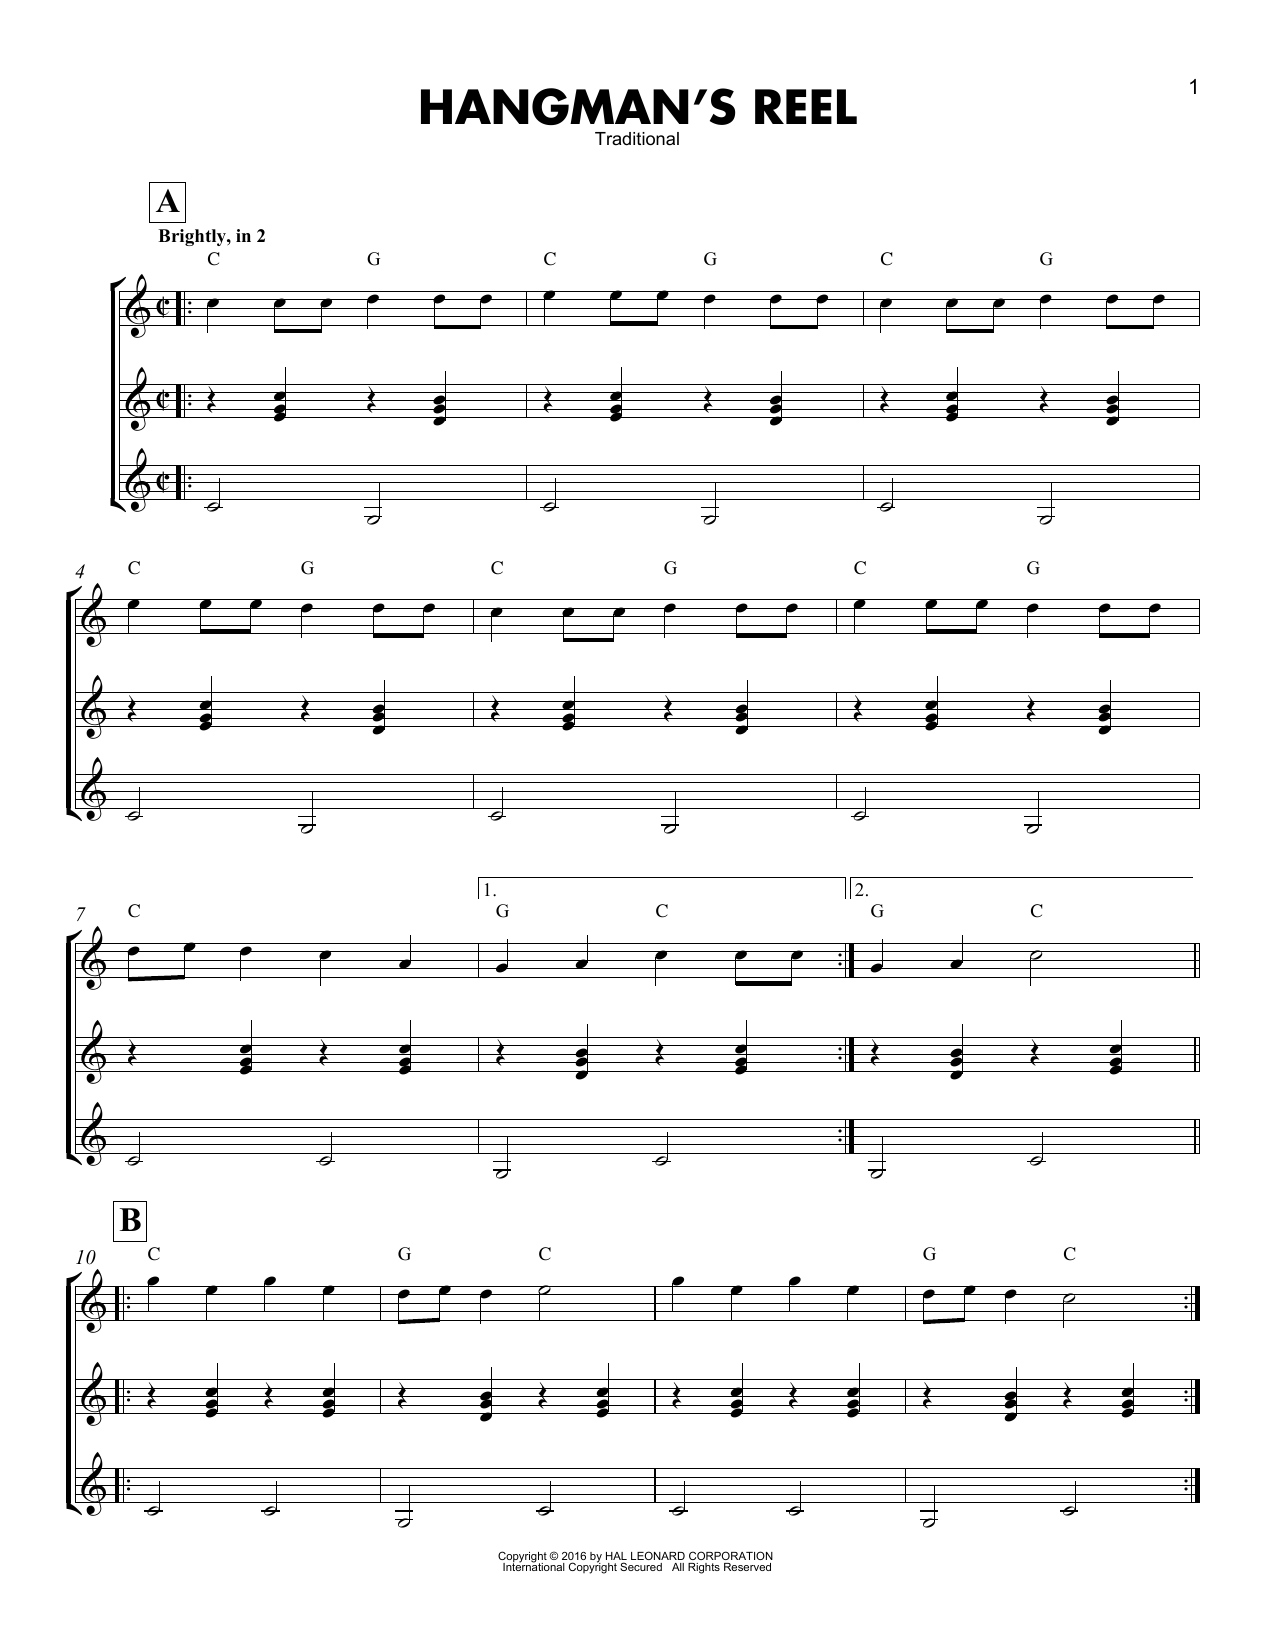 Traditional Hangman's Reel Sheet Music Notes & Chords for Guitar Ensemble - Download or Print PDF